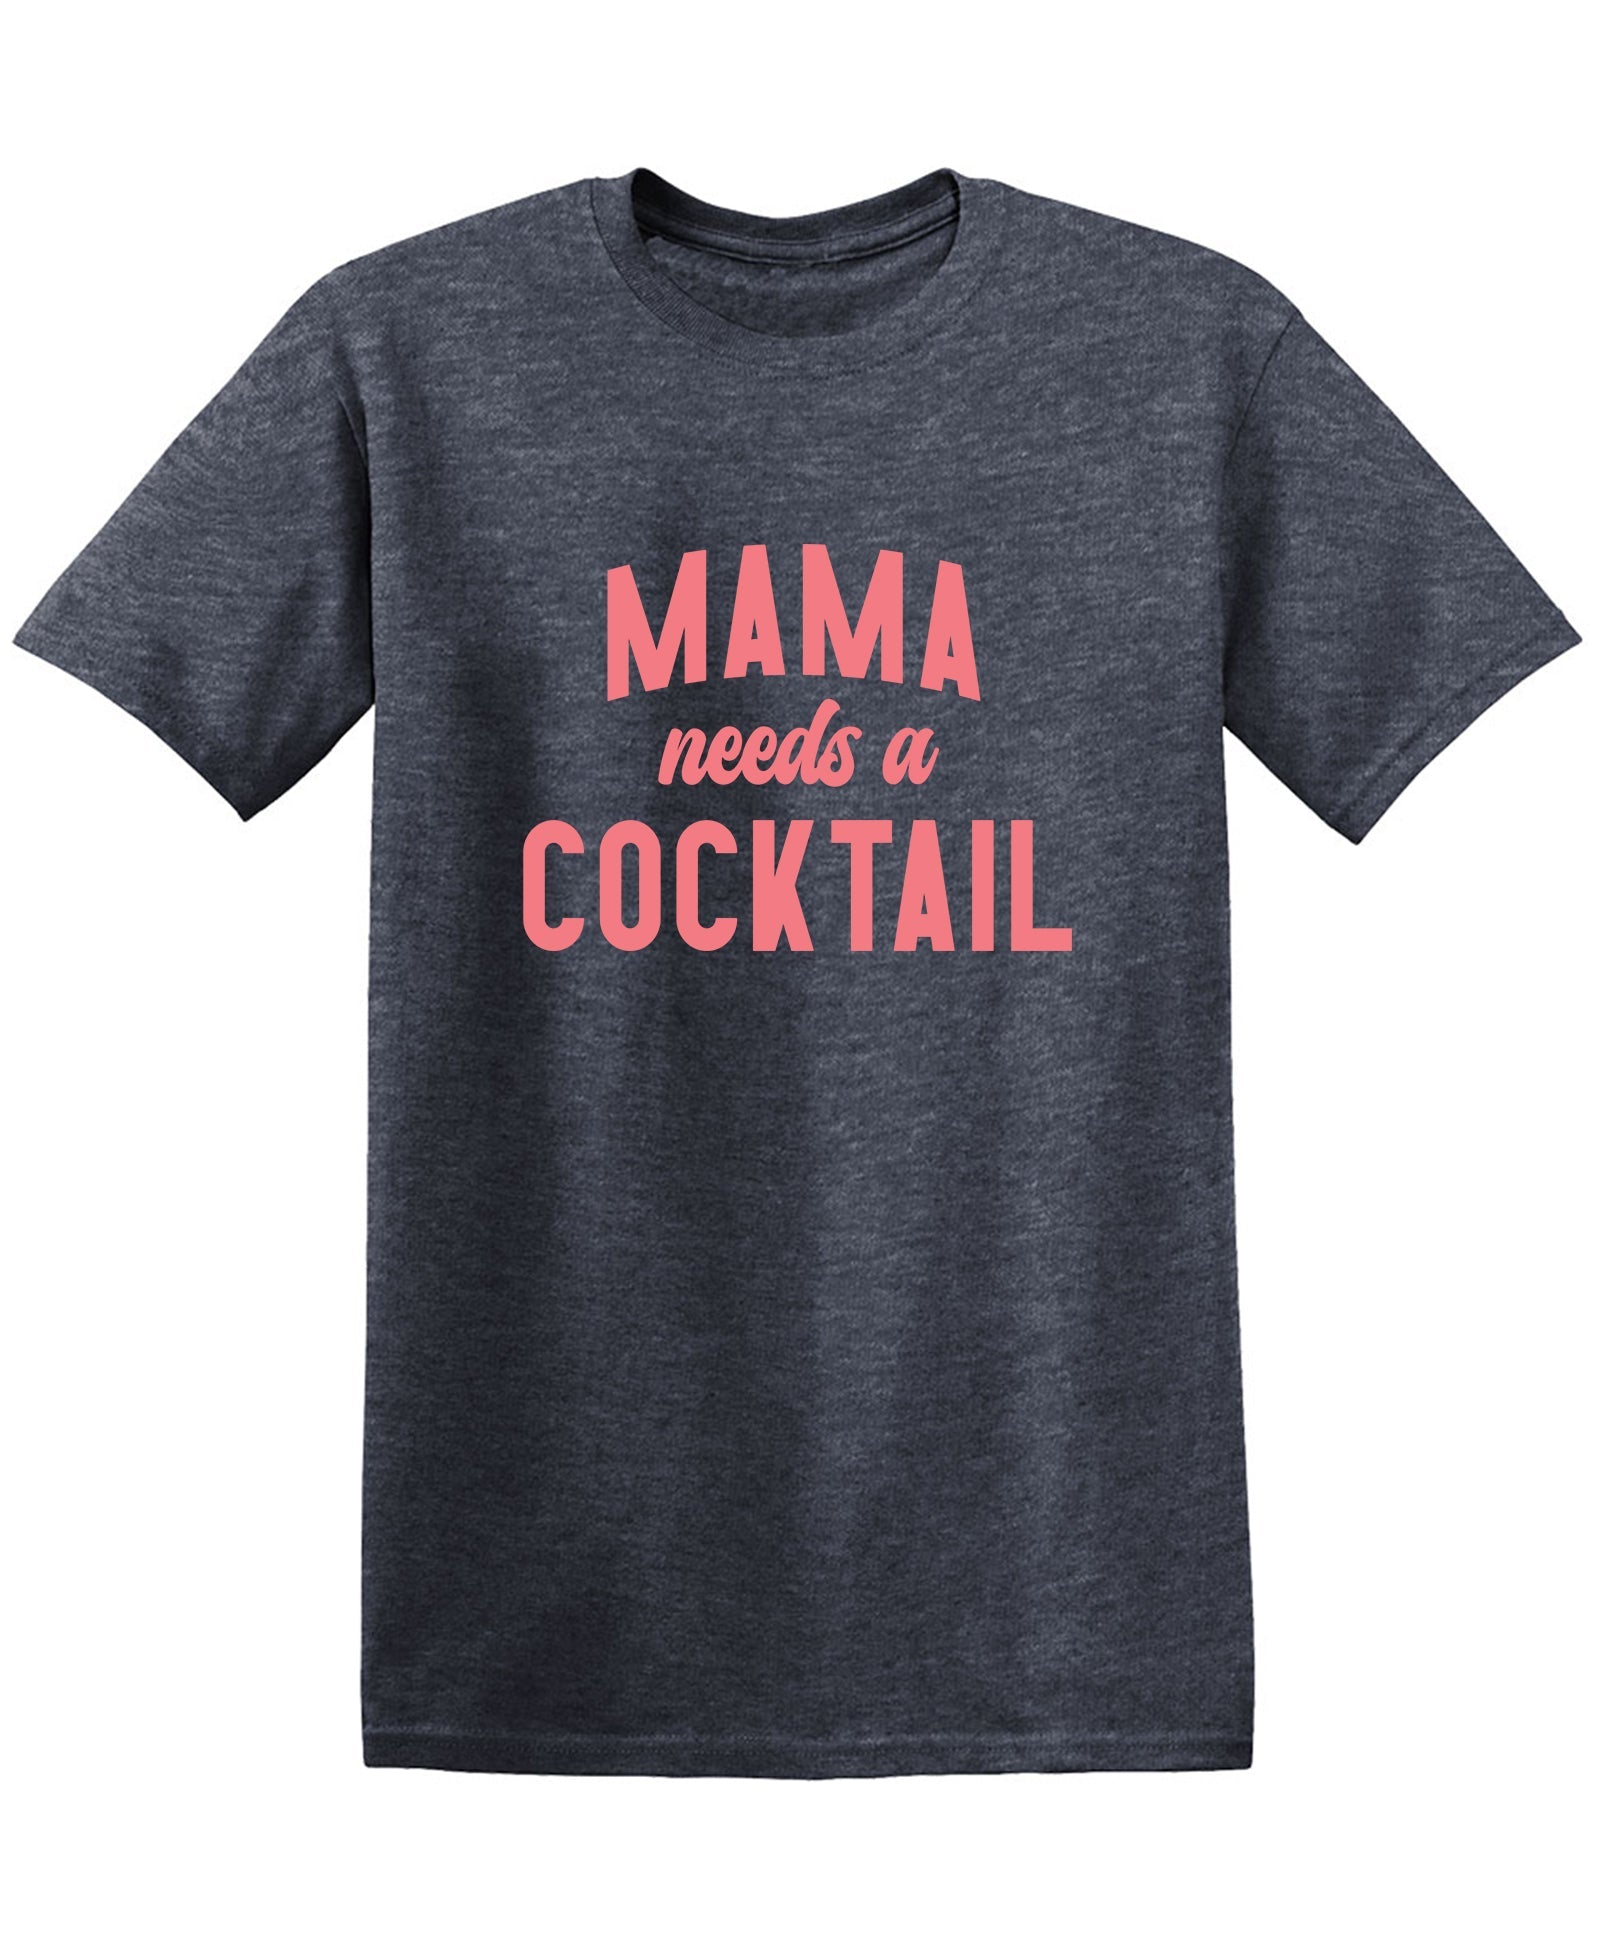 MAMA needs a Cocktail